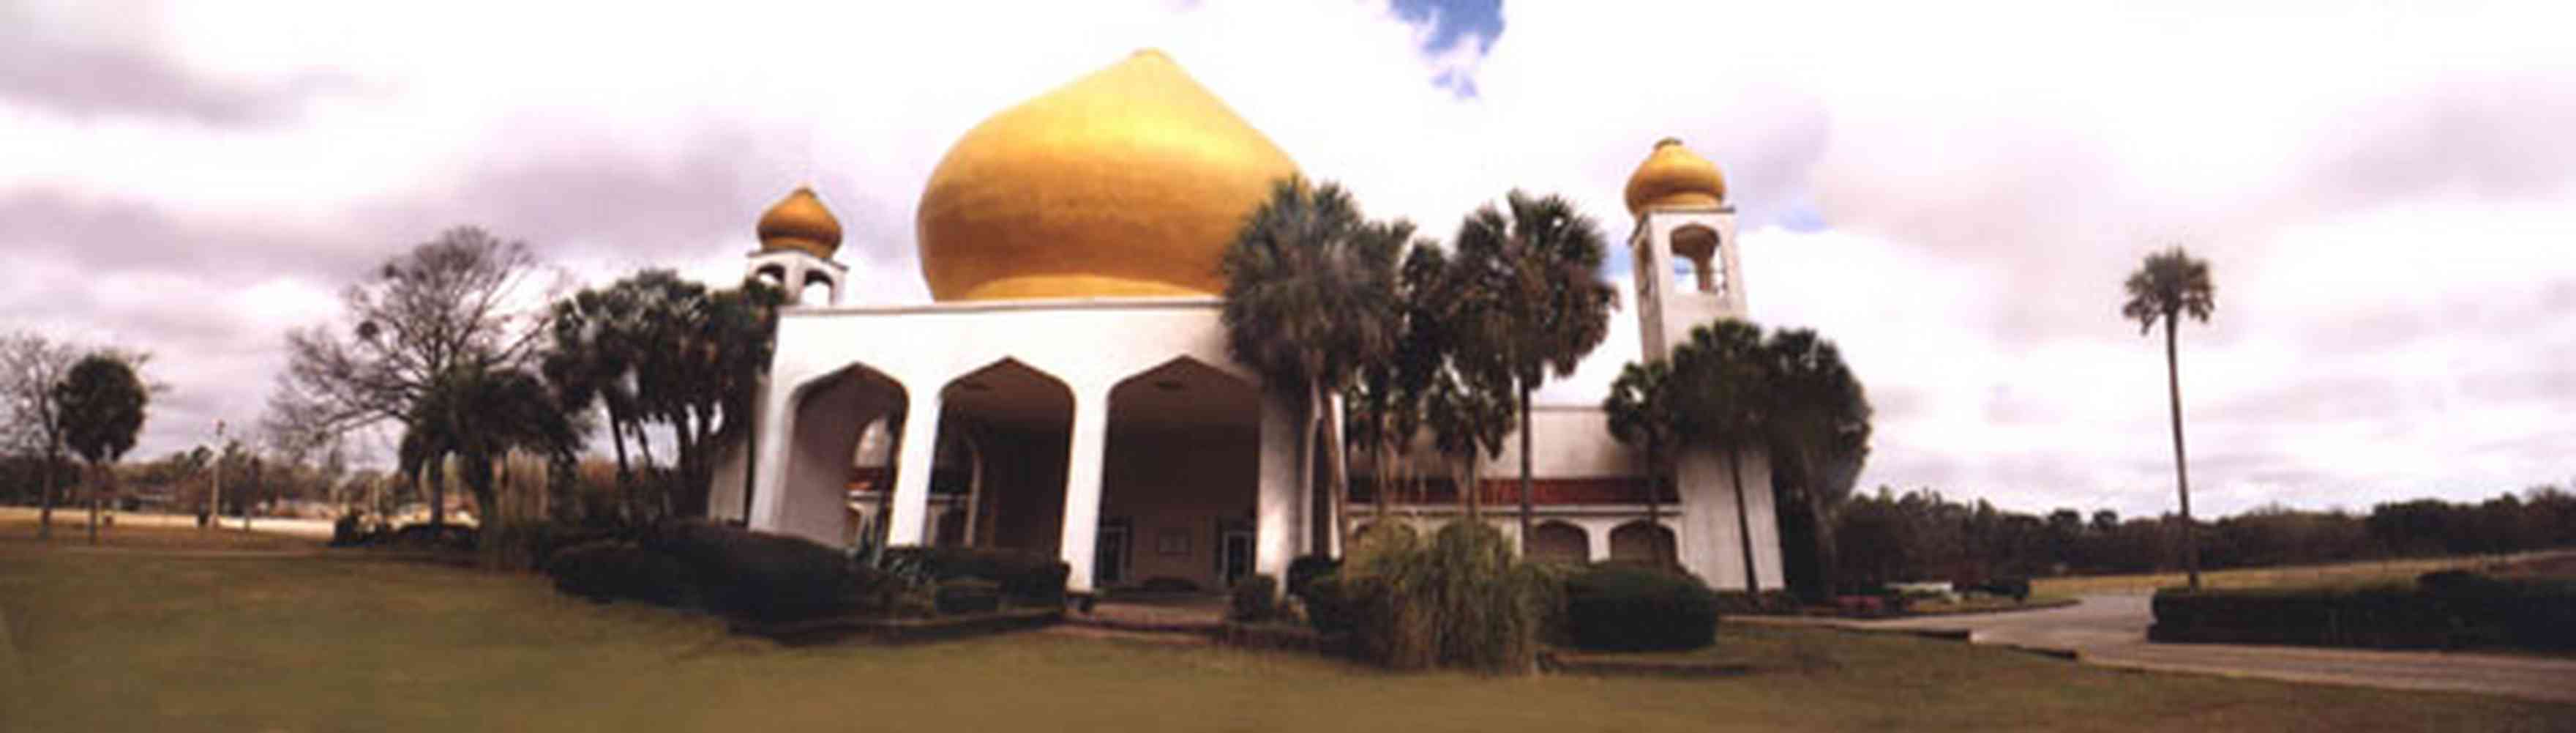 Ensley:-Hadji-Shrine-Temple_01.jpg:  masons, palm trees, golden dome, arabian architecture, mosque